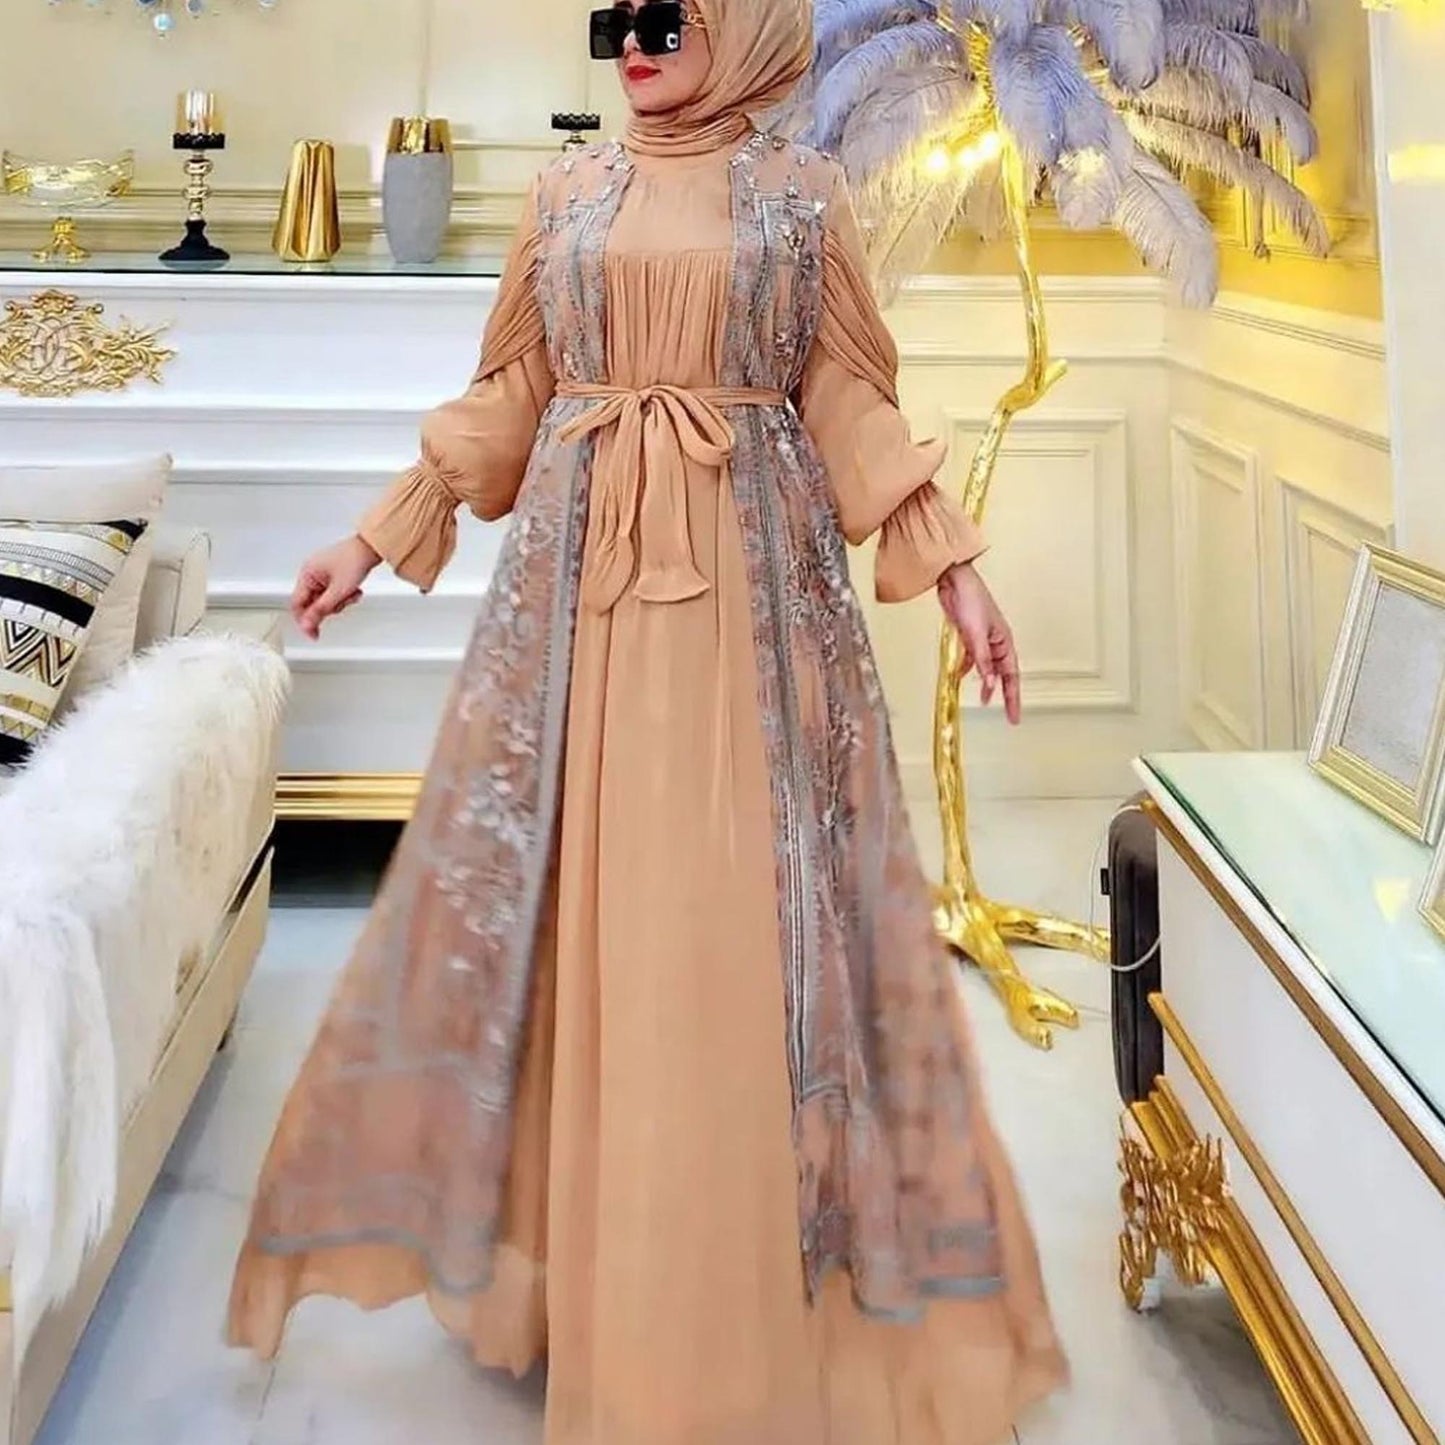 Zhavira Gamis Dress - Babydoll Model with a Stunning Brukat Touch, Muslimah fashion, Muslim Women, Women Dress, Gamis, Islamic Dress